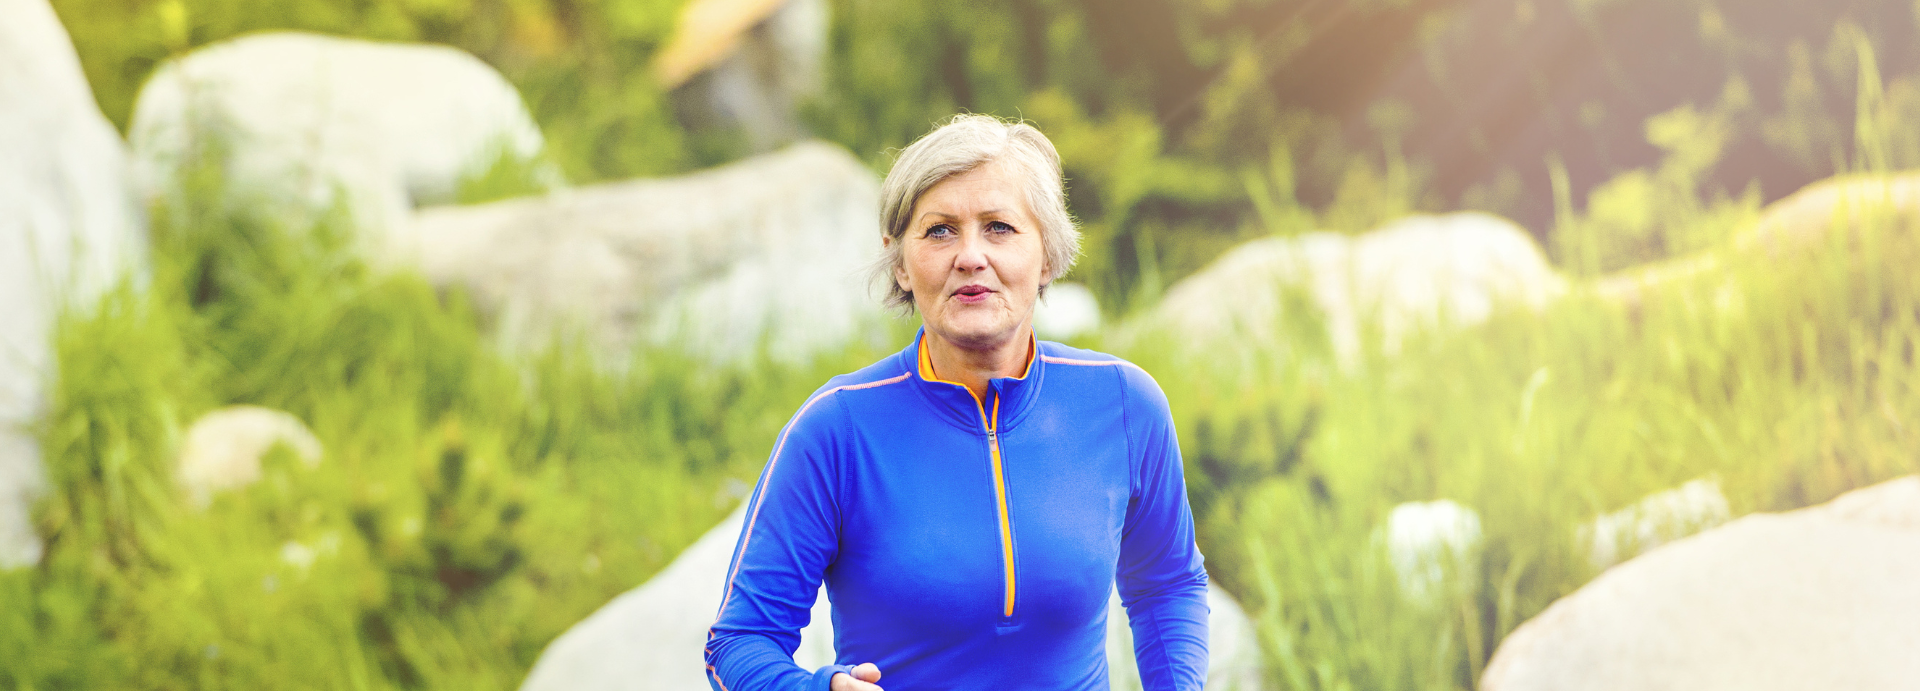 Woman aged 55-65 running